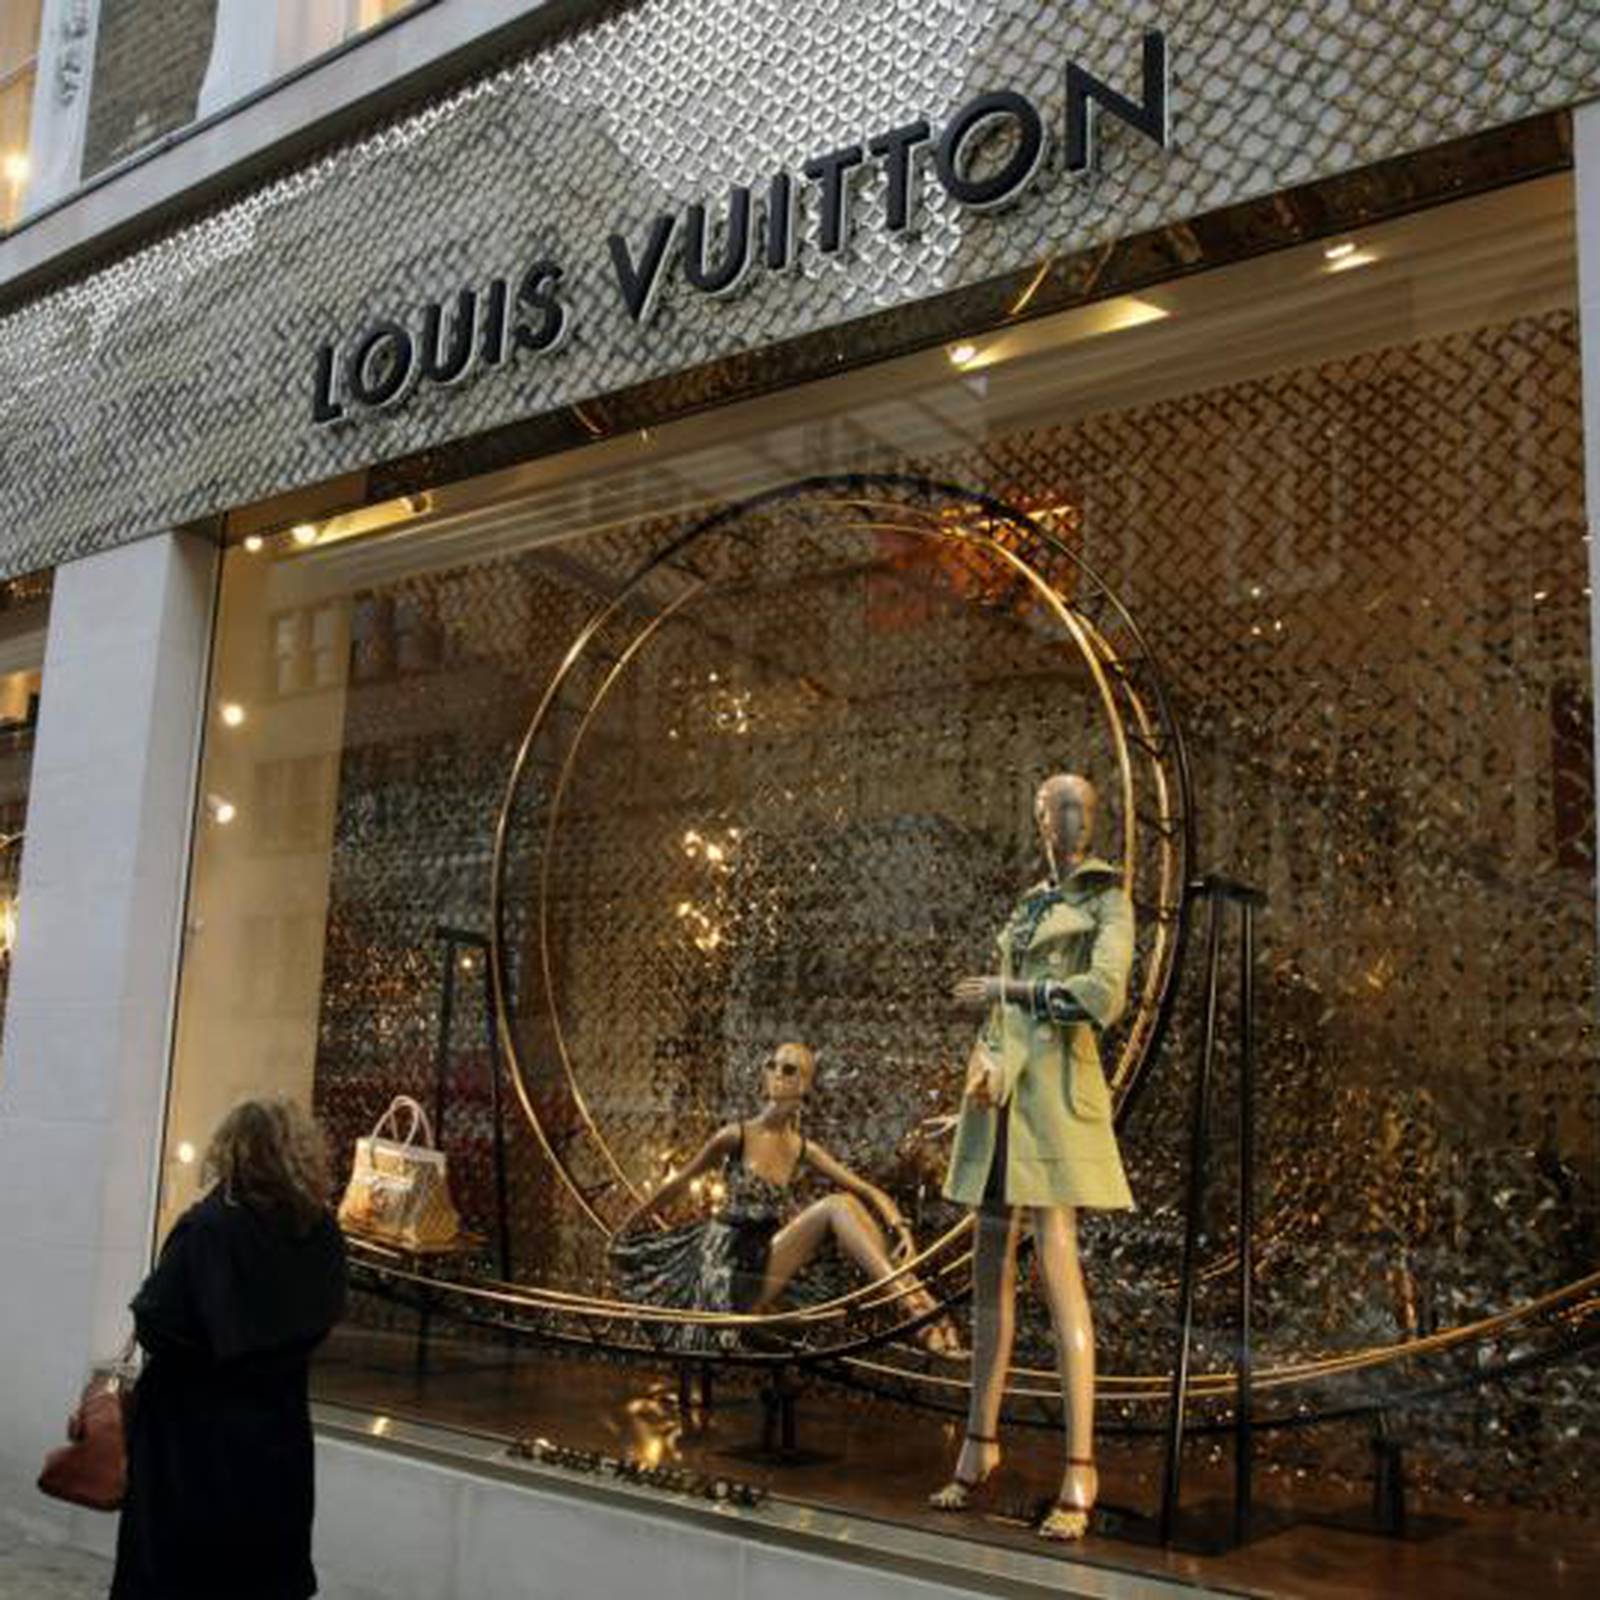 Louis Vuitton chequerboard pattern wins before European Court - Legal Patent